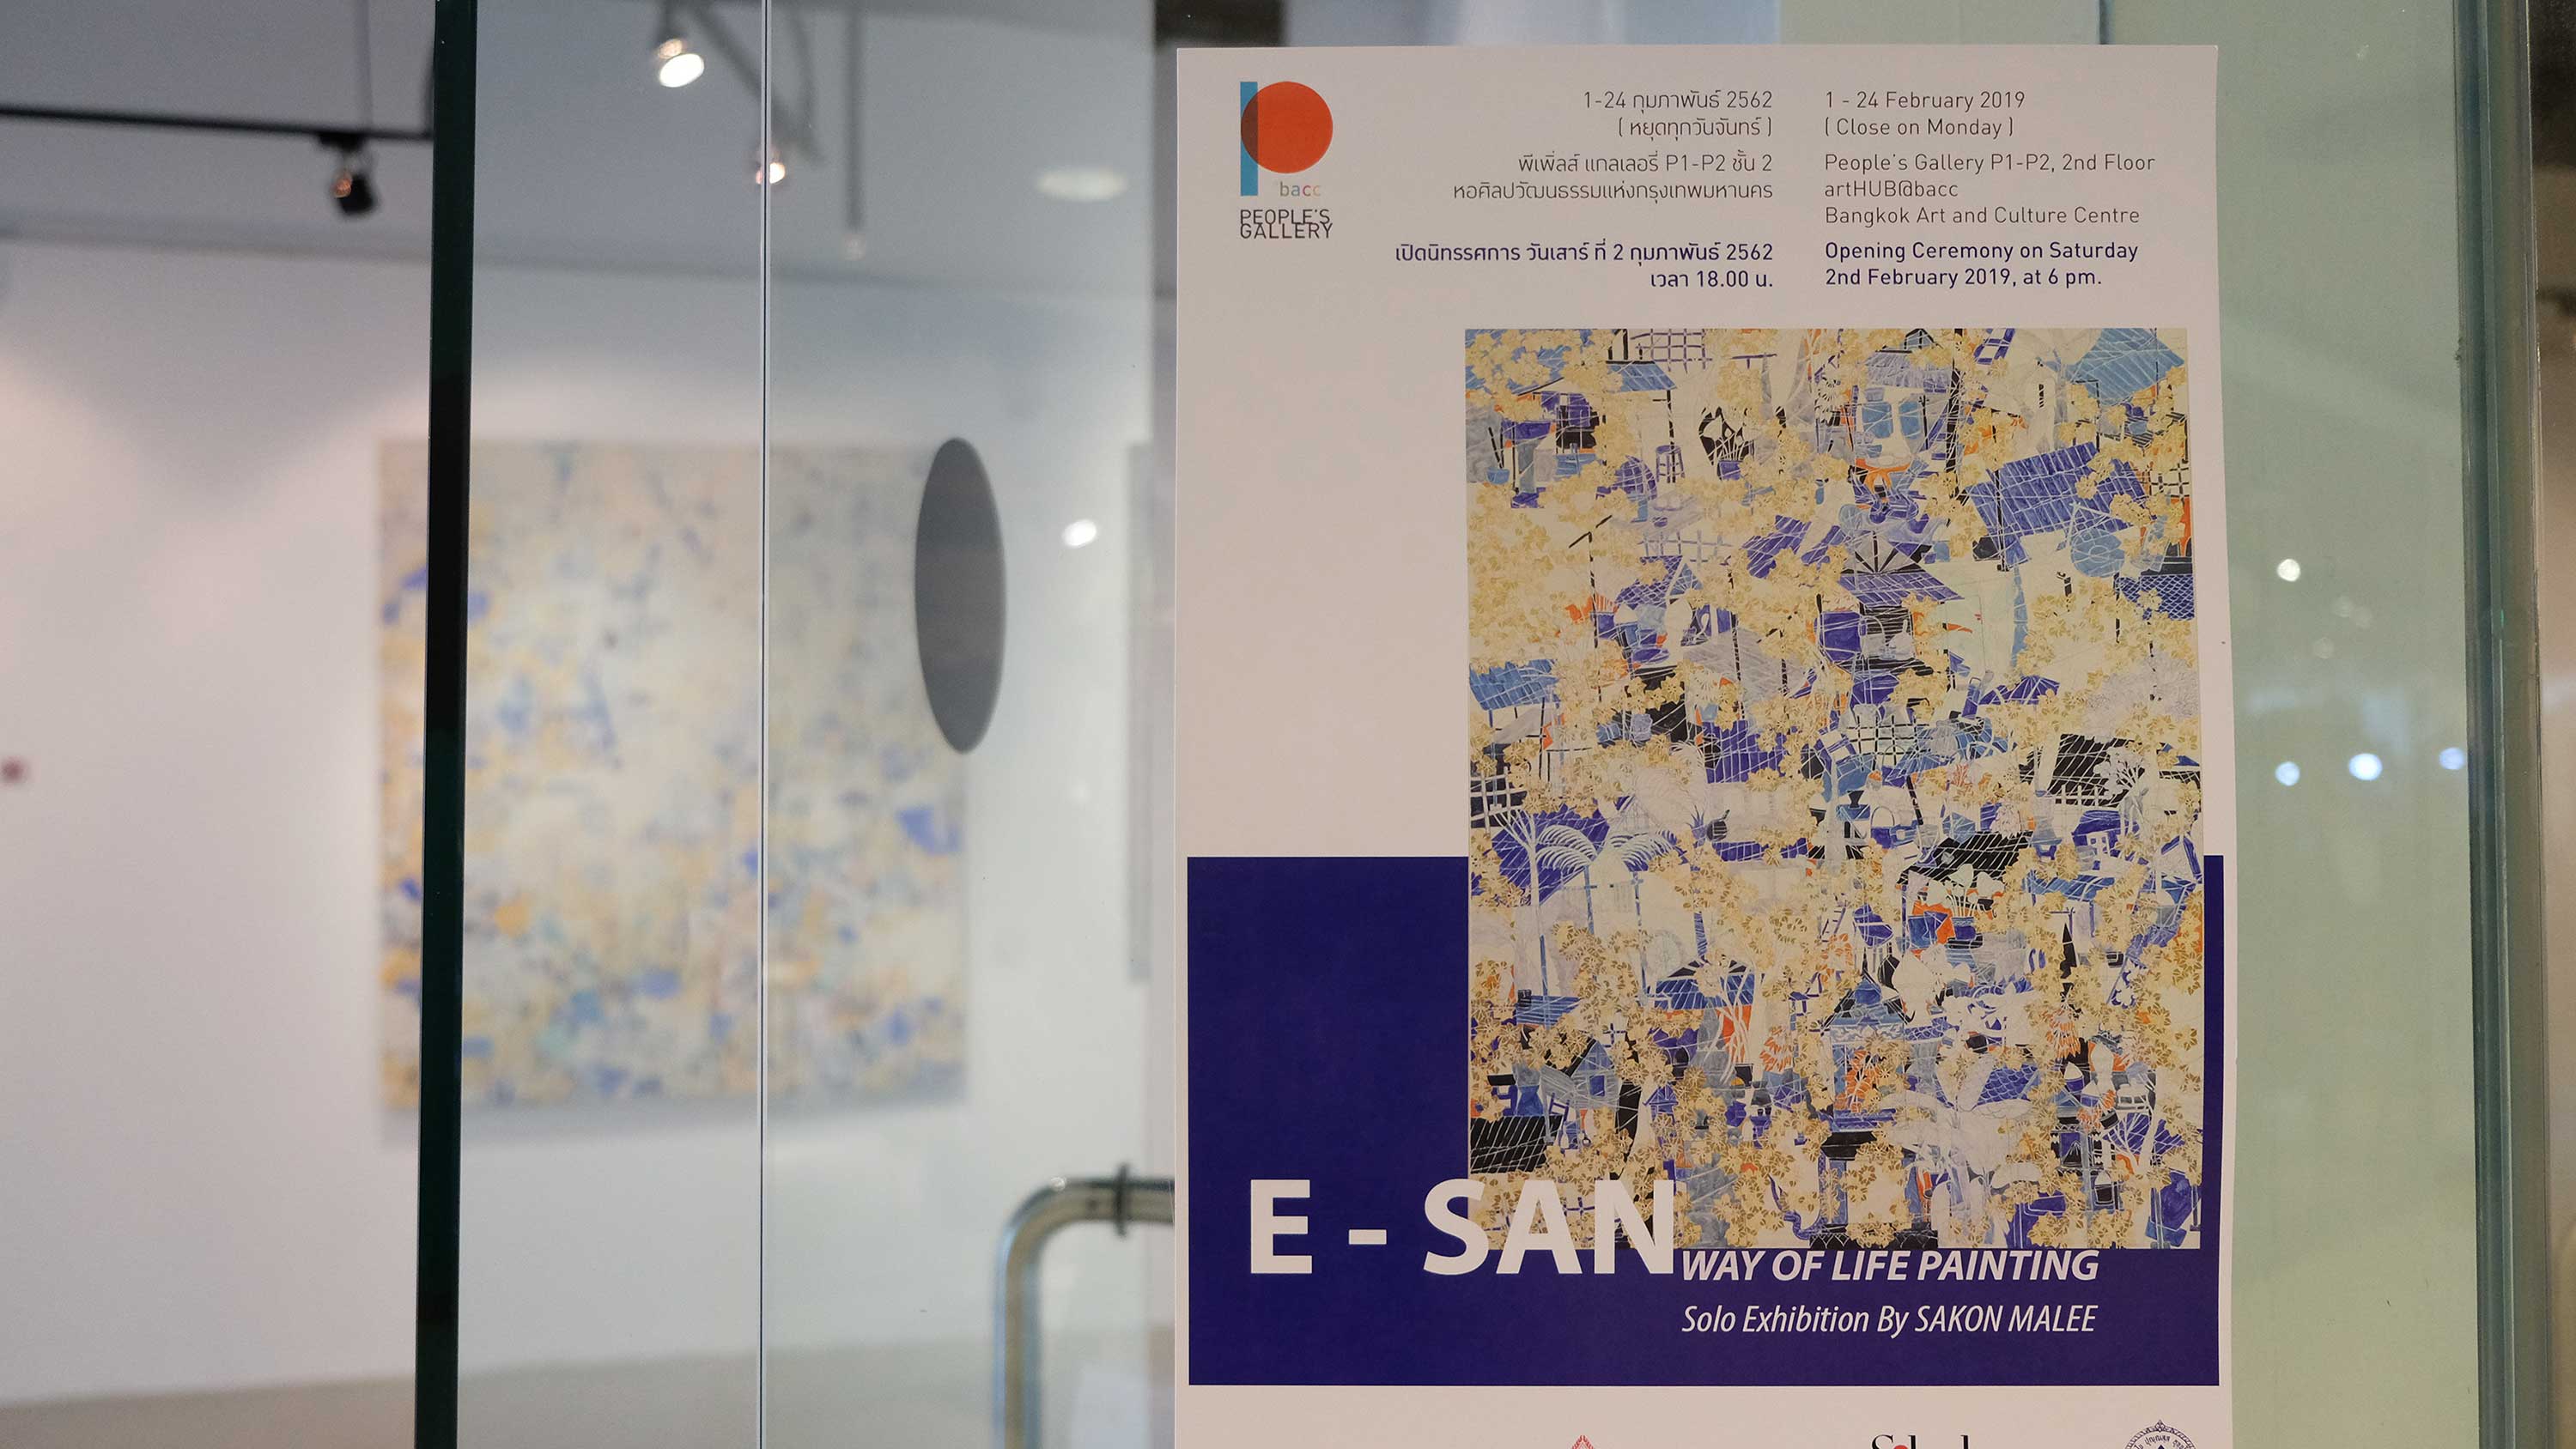 Exhibition E-SAN way of life painting exhibition By Sakon Malee | นิทรรศการ อีสาน โดย สกล มาลี